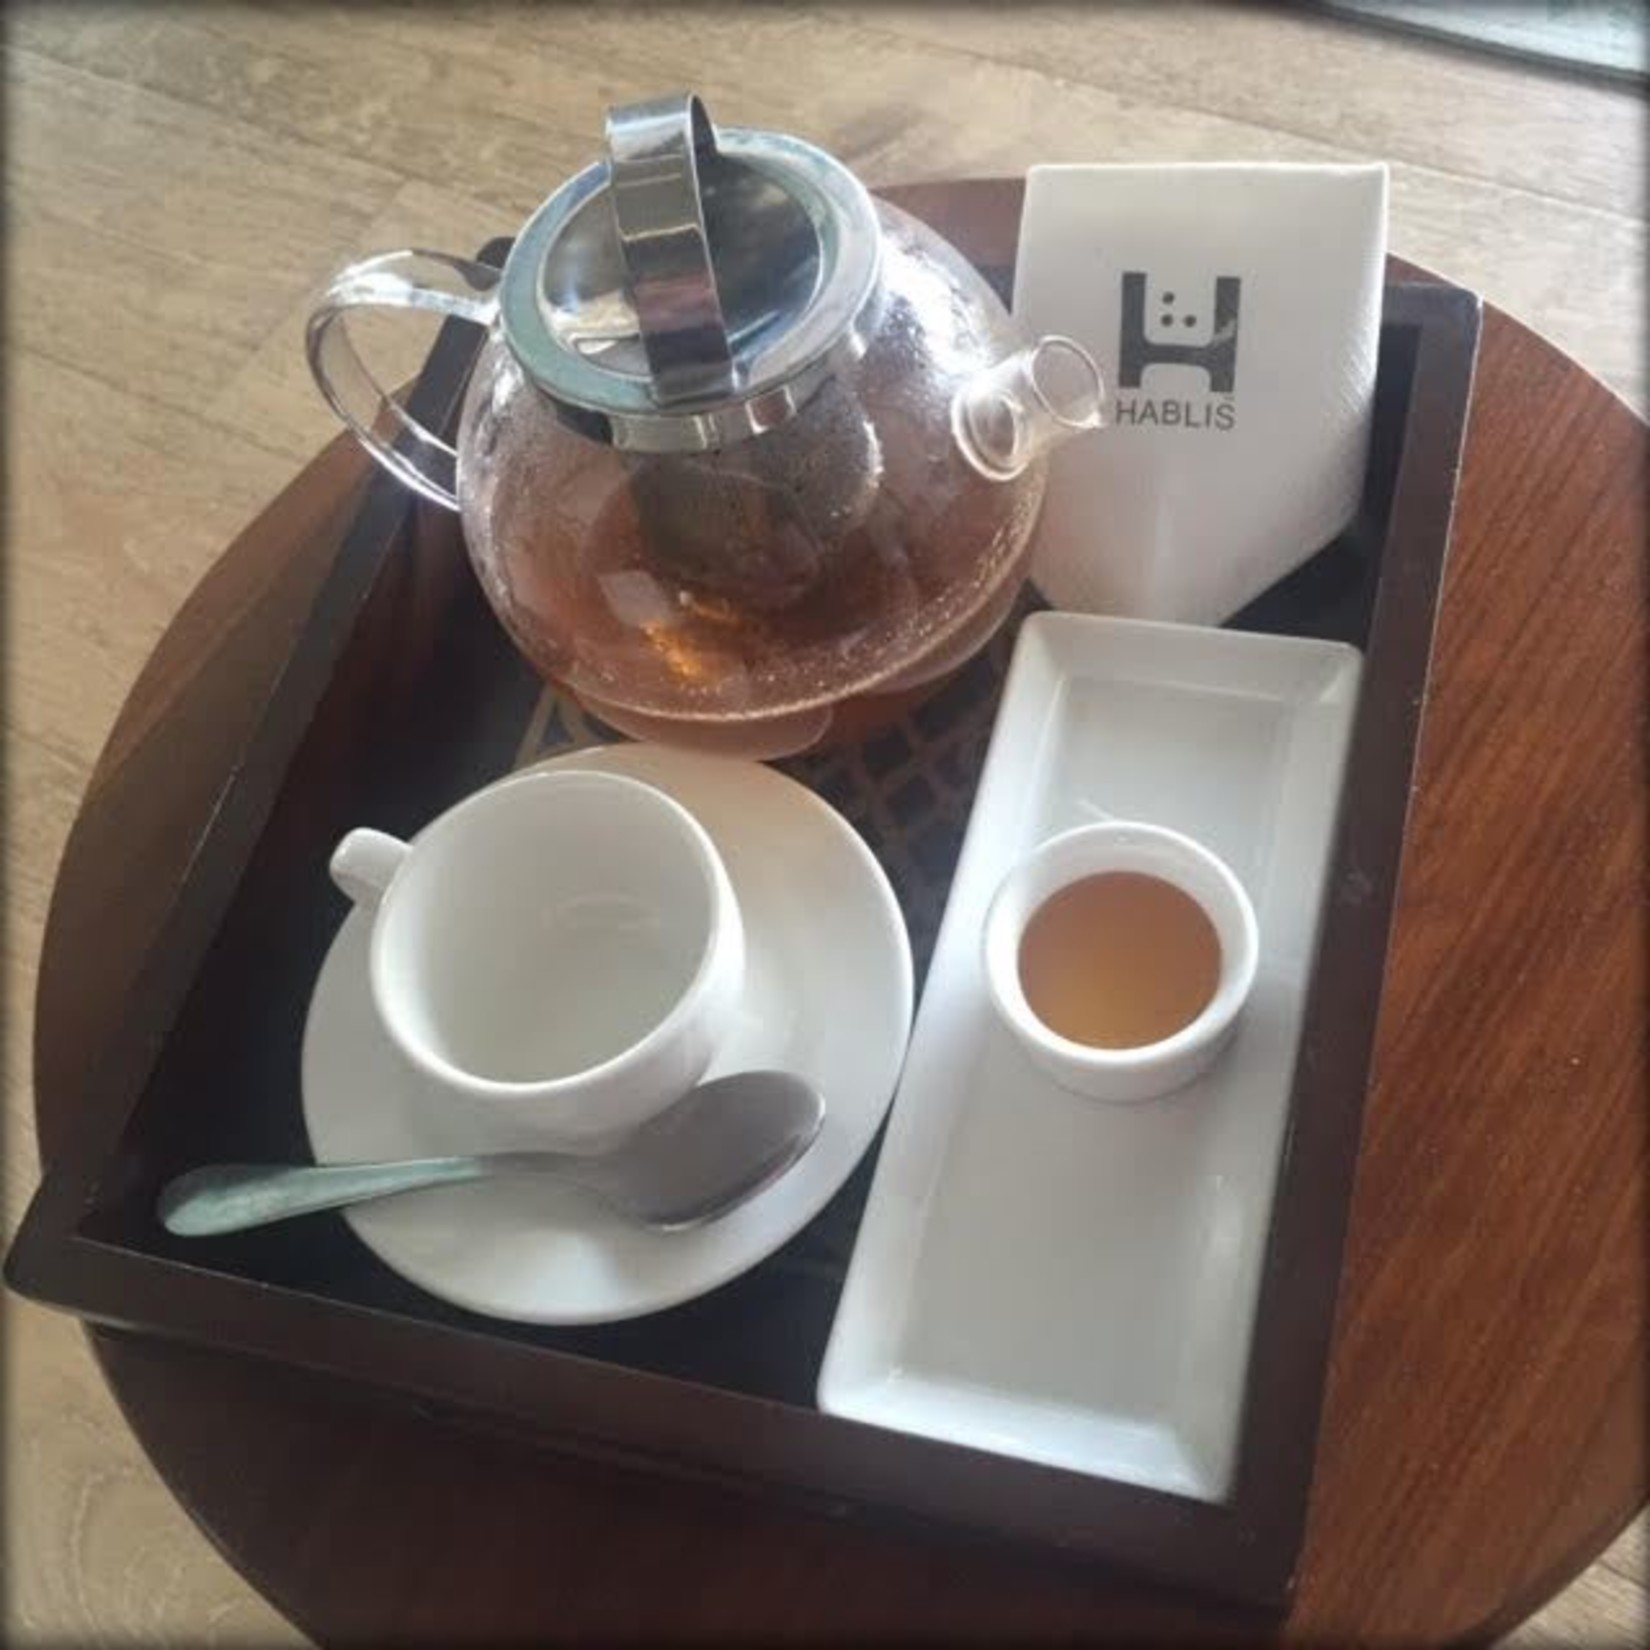 Herbal tea elixir at Hablis Hotel, Chennai